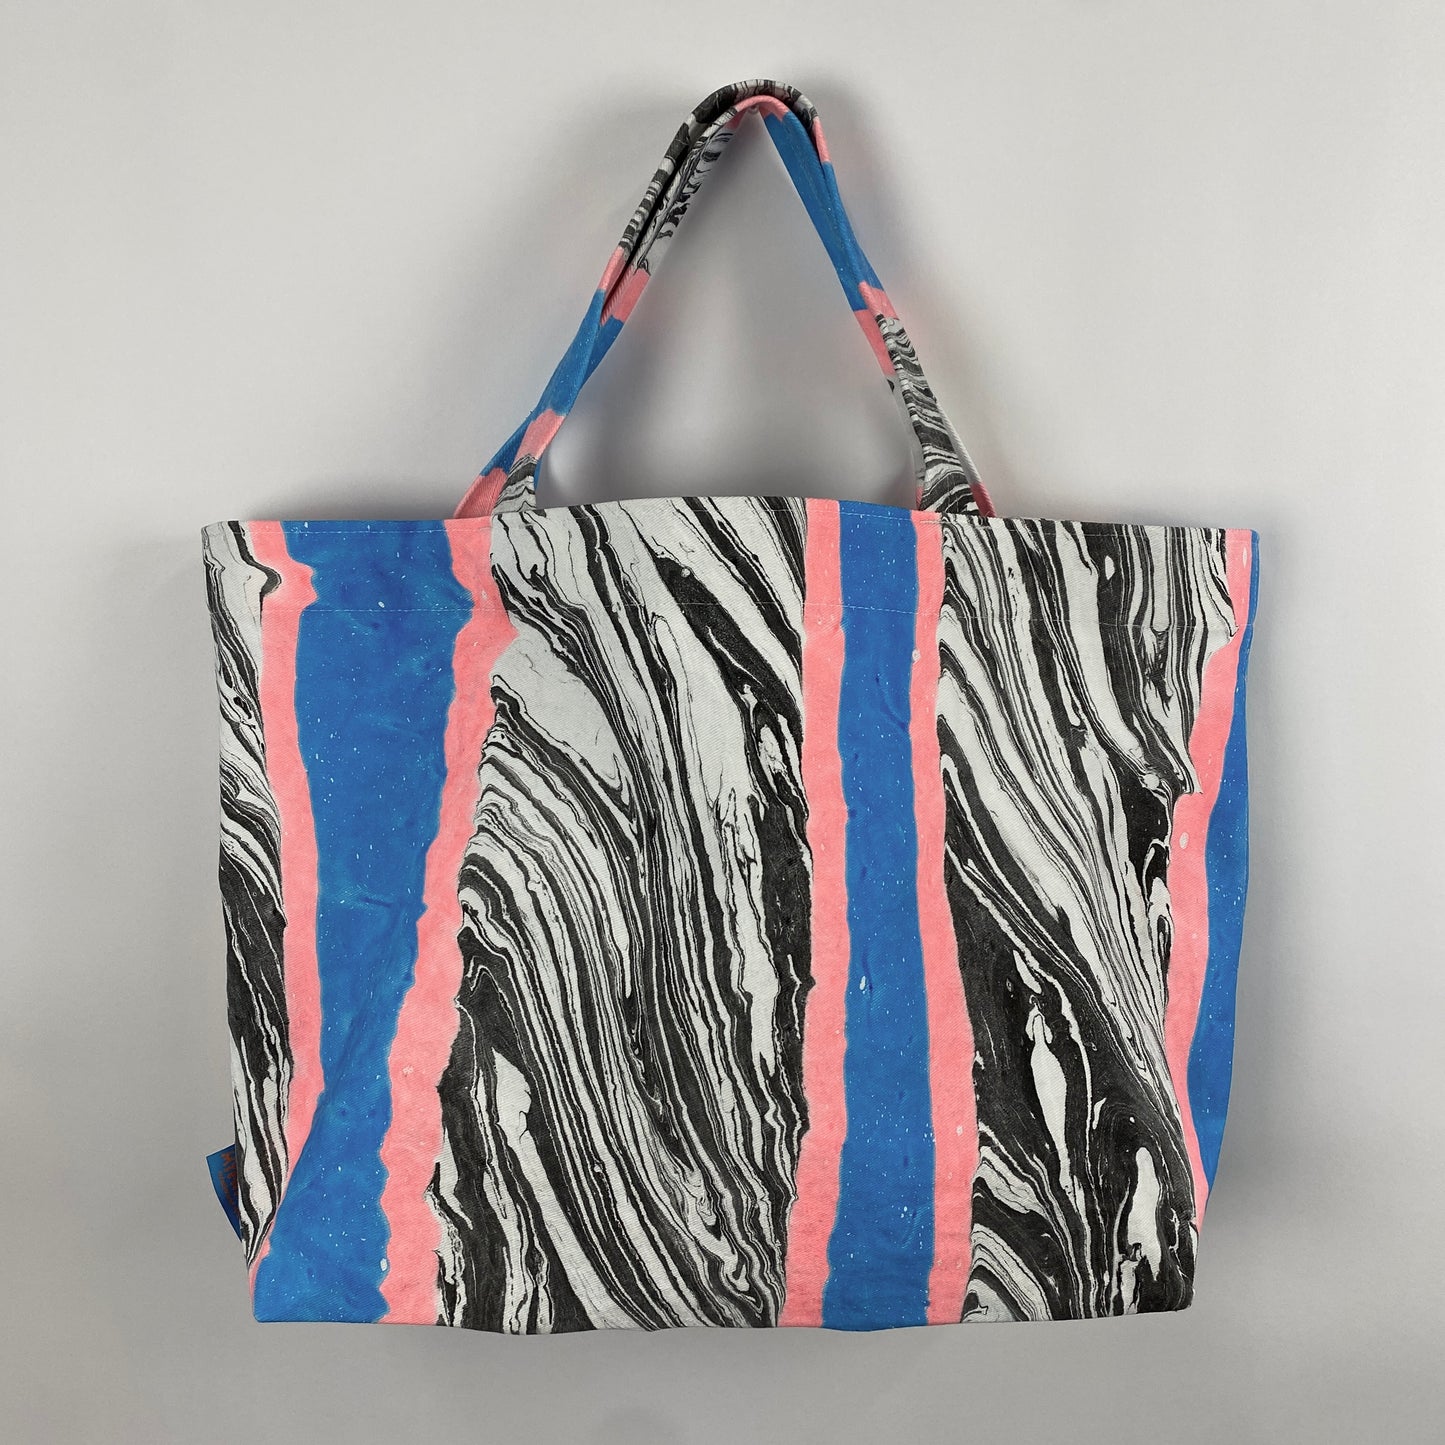 SAMPLE/ SECONDS Neon Peach and Blue Marble Stripe Beach Bag